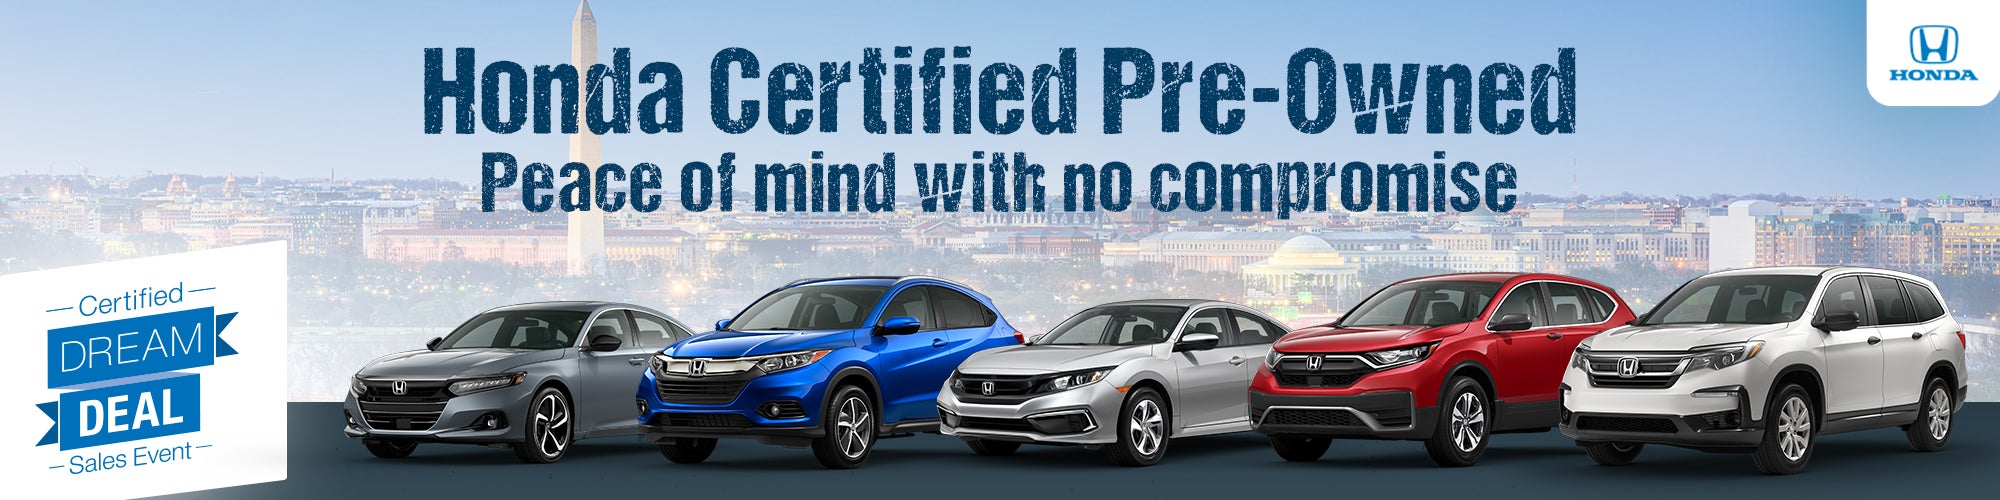 Honda certified pre owned